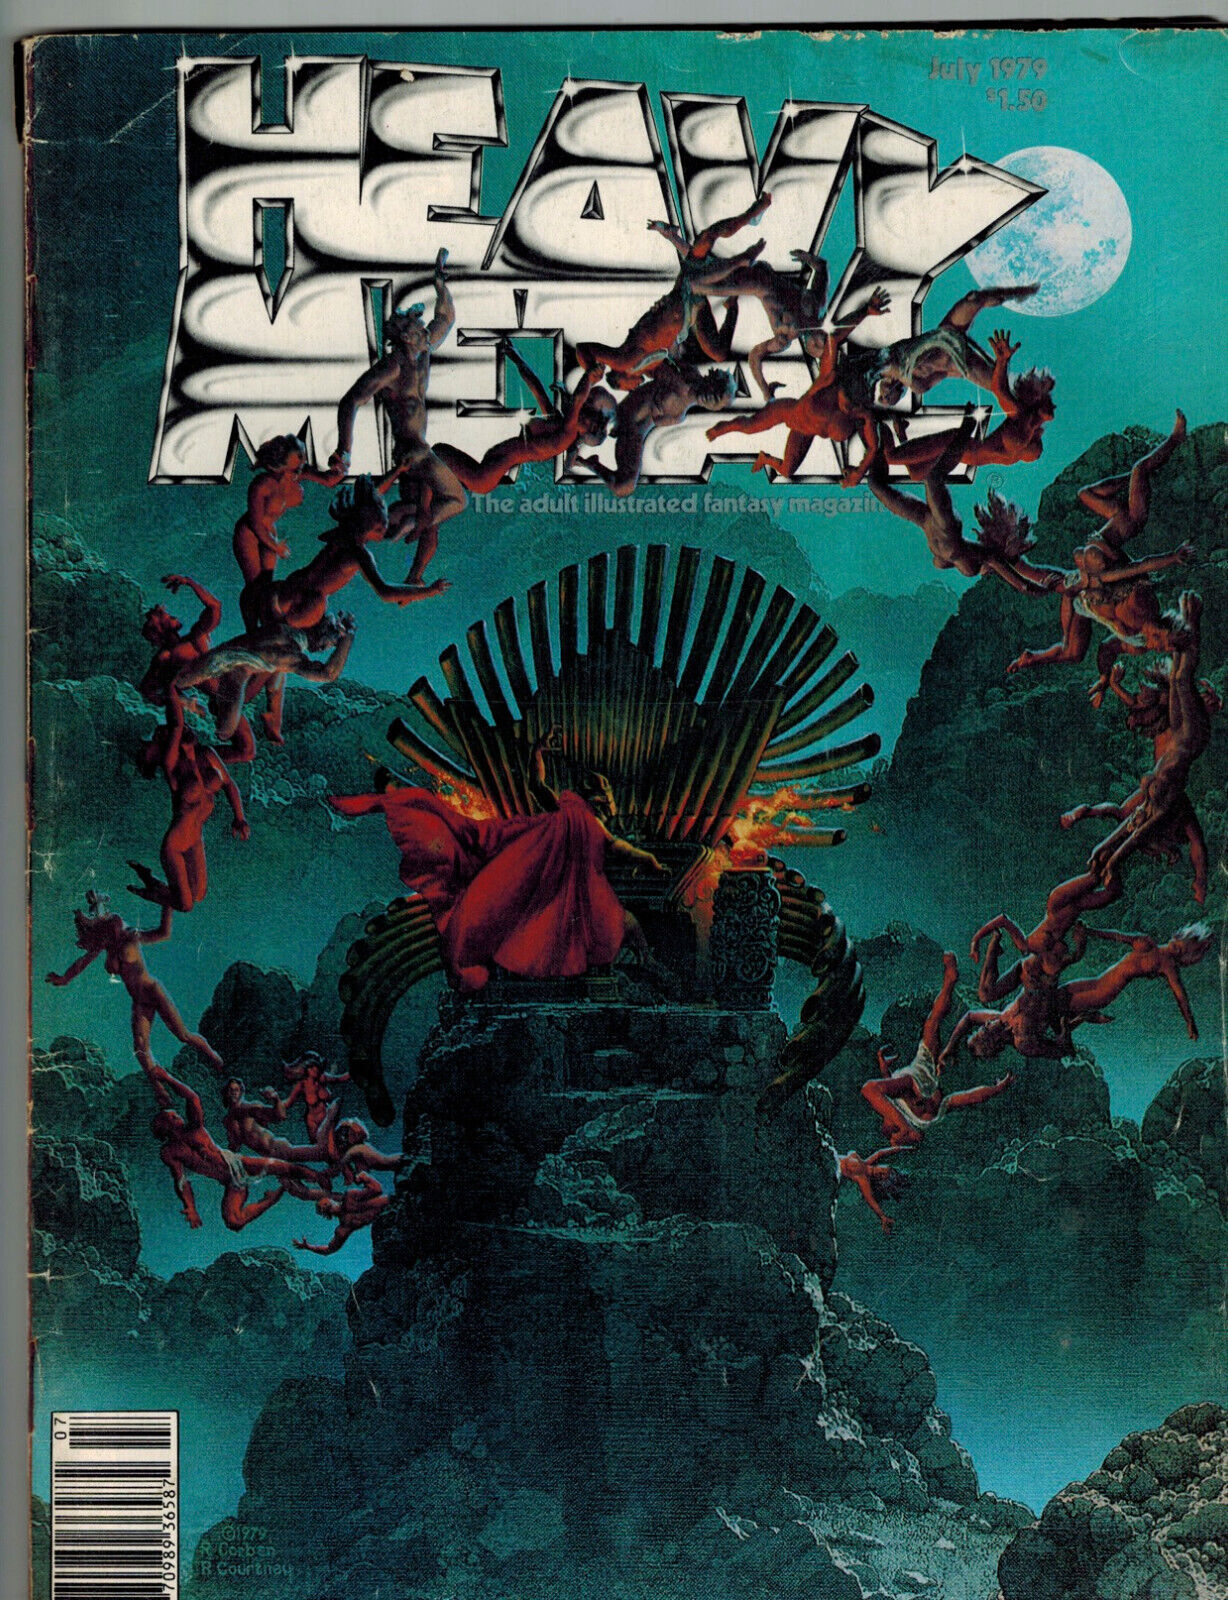 Heavy Metal Magazine July 1979